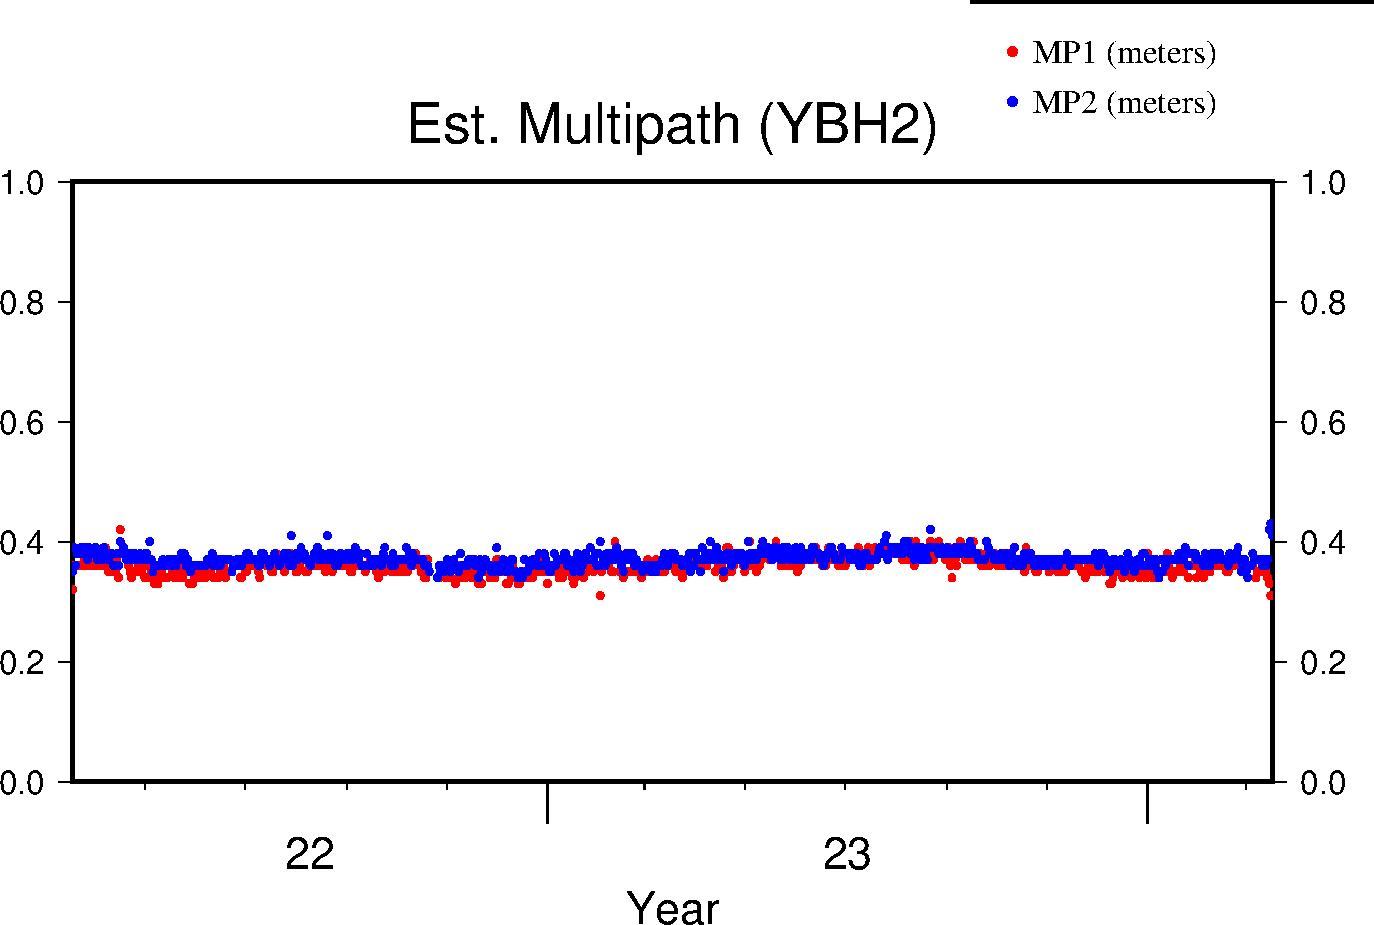 YBH2 multipath lifetime